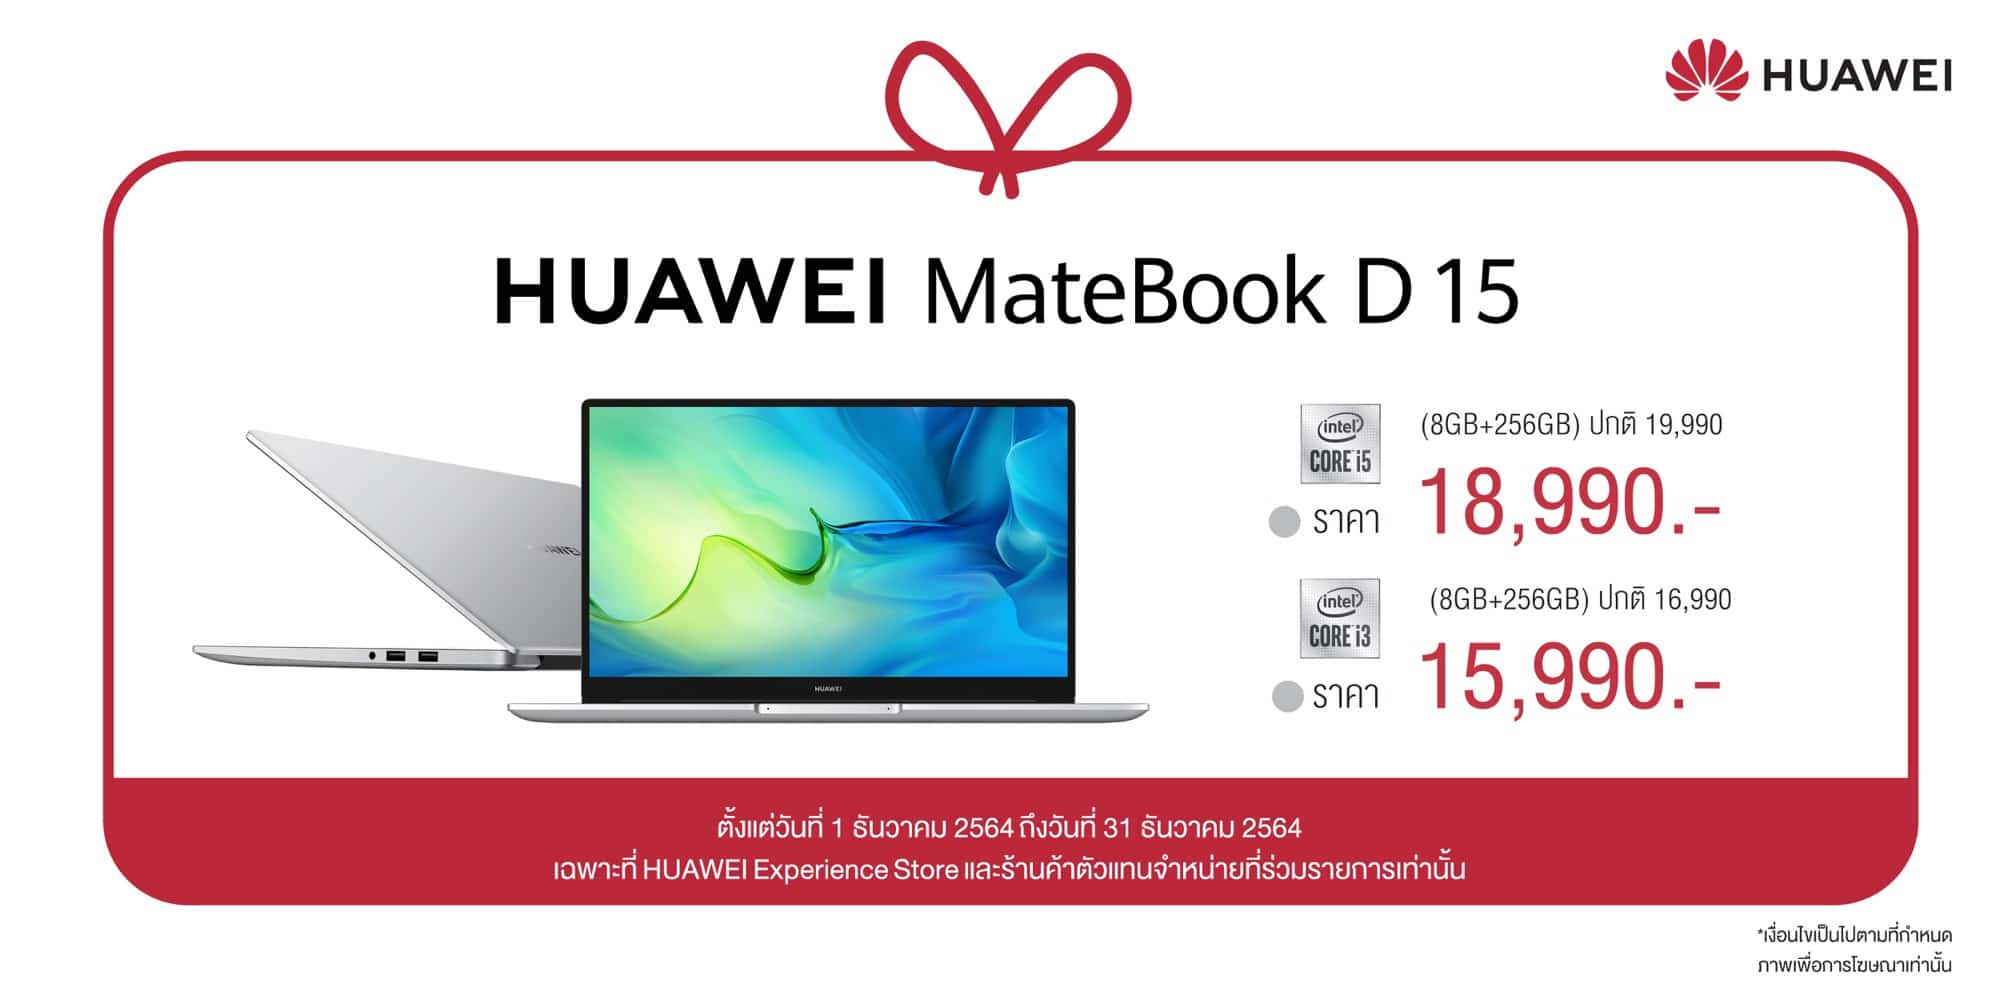 HUAWEI MateBook D Series จัดโปรราคาดี เริ่มต้น 15,990 บาท 5